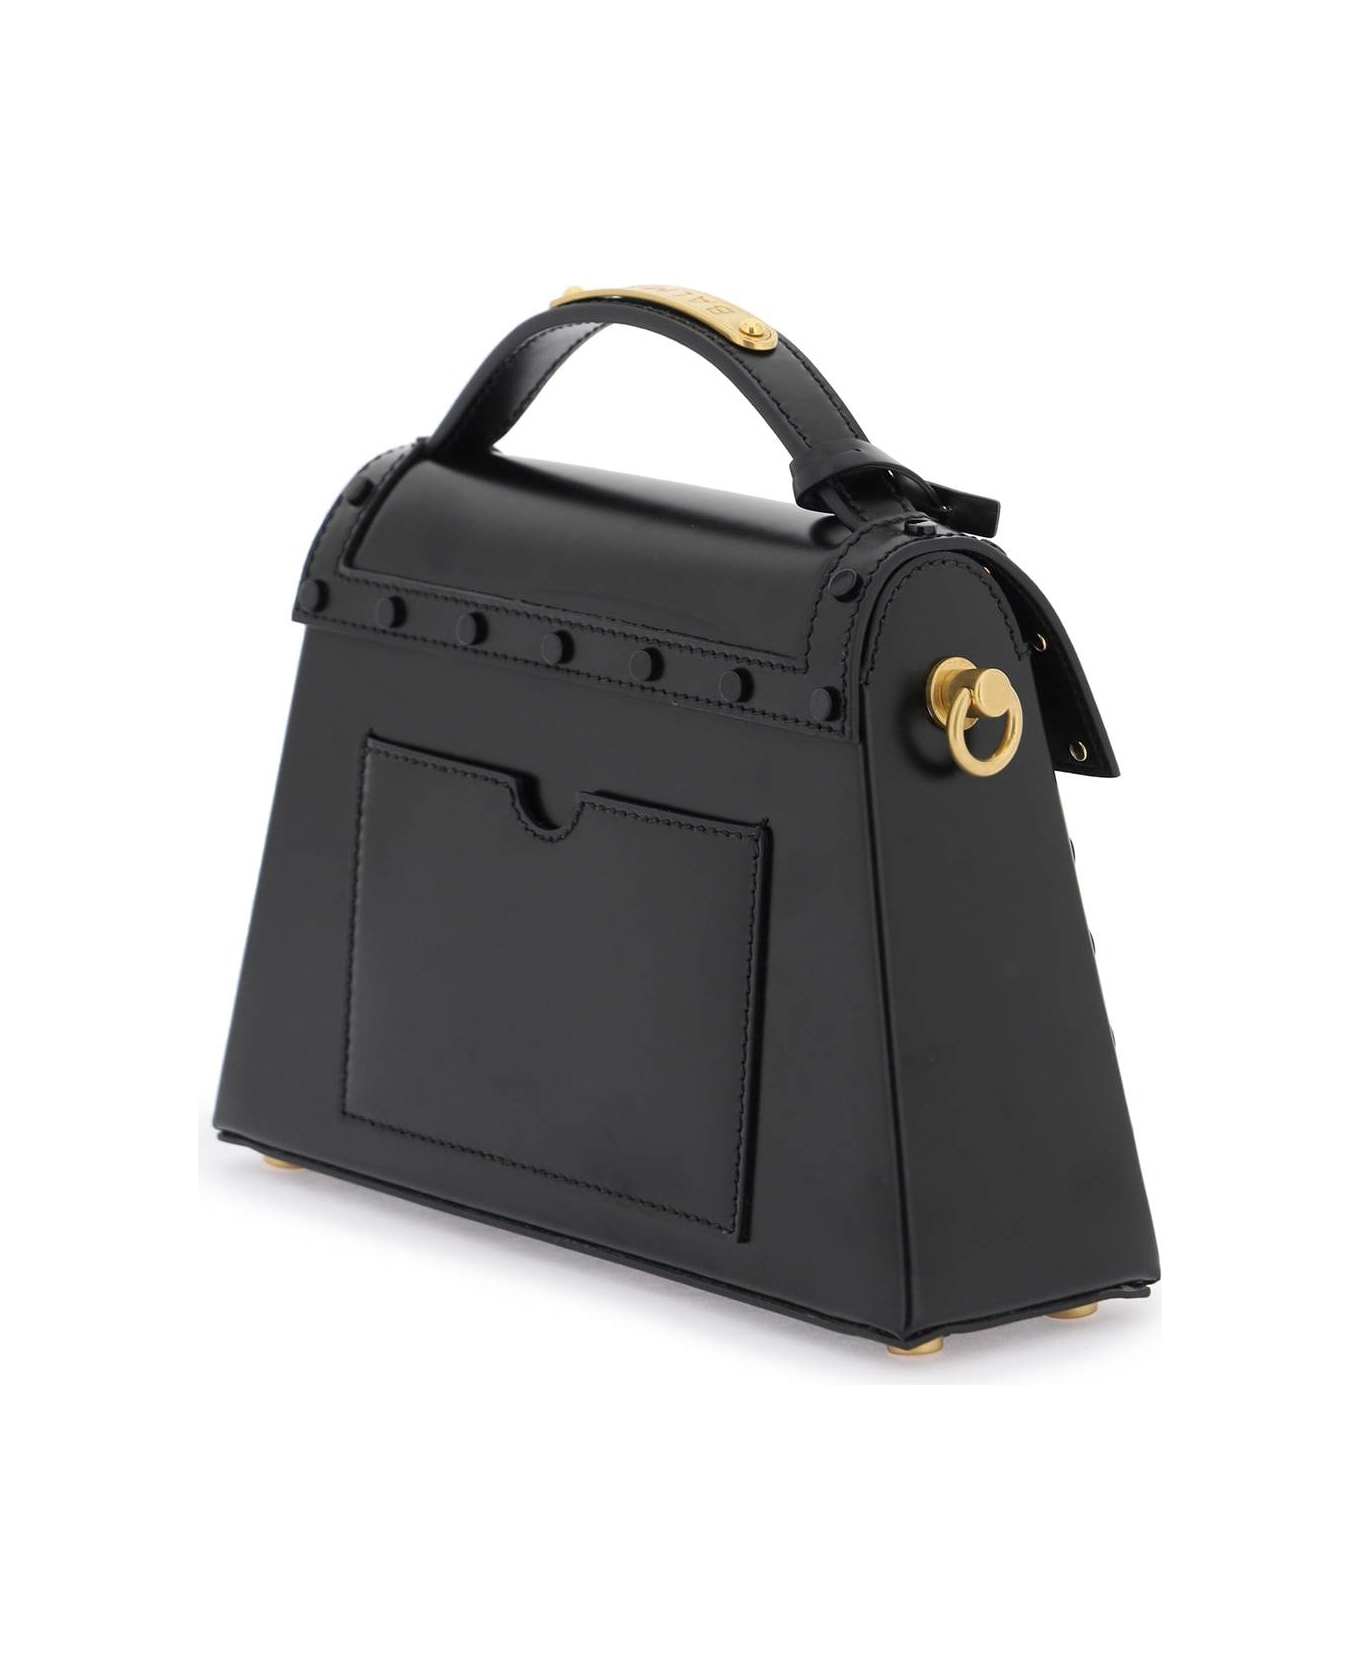 Balmain B-buzz Dynasty Handbag - NOIR (Black) トートバッグ